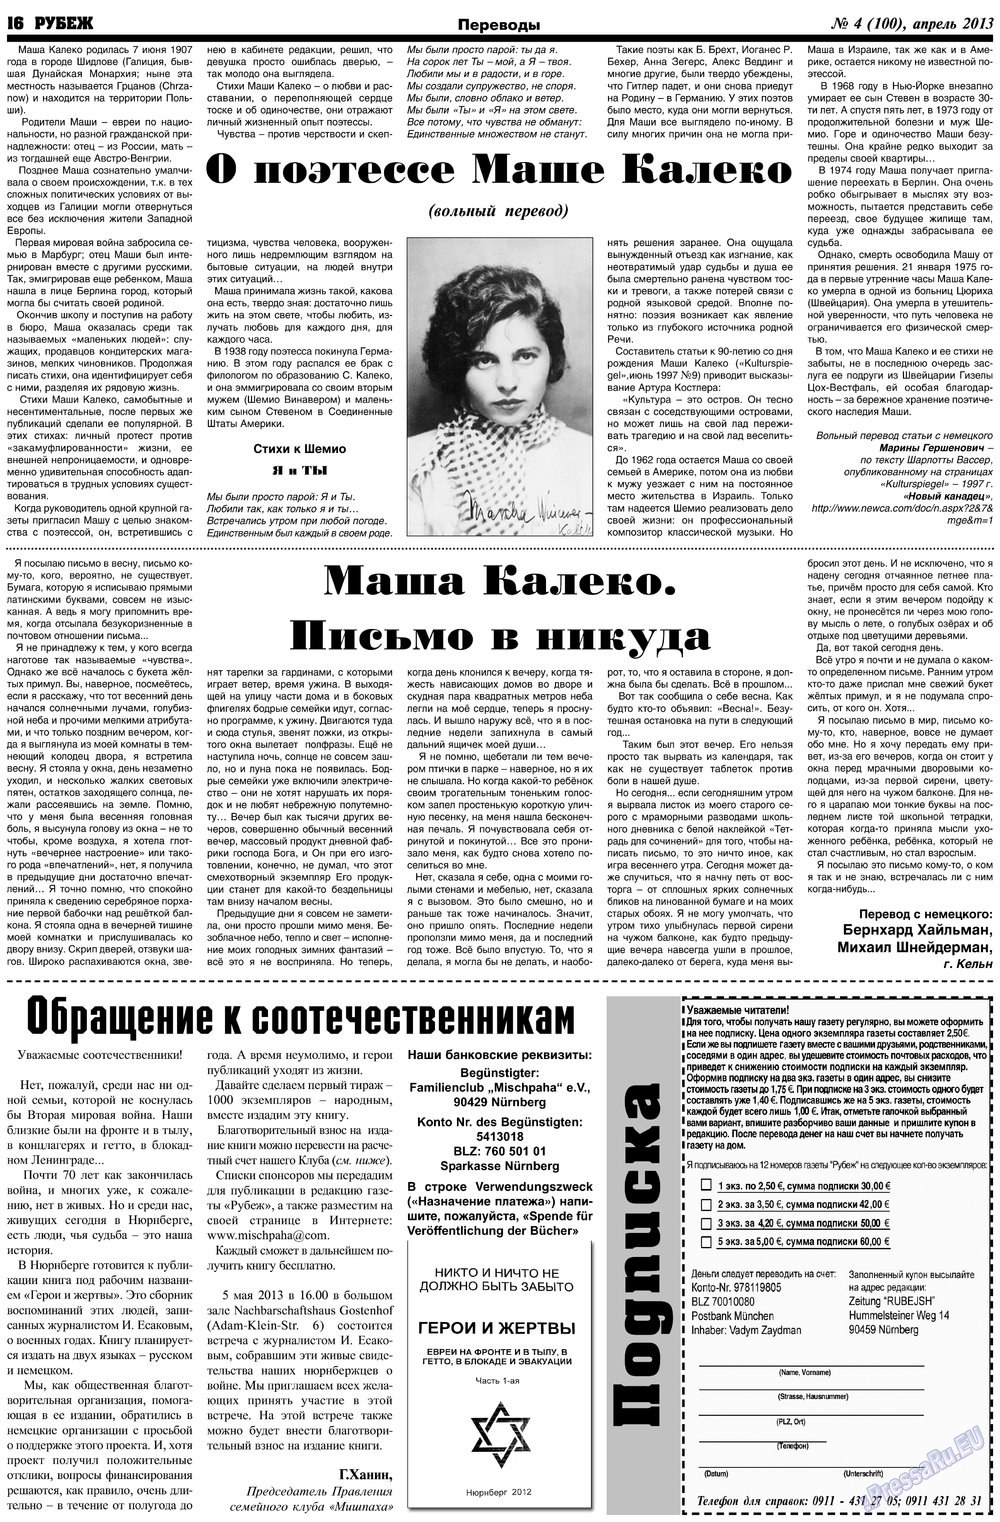 Рубеж, газета. 2013 №4 стр.16